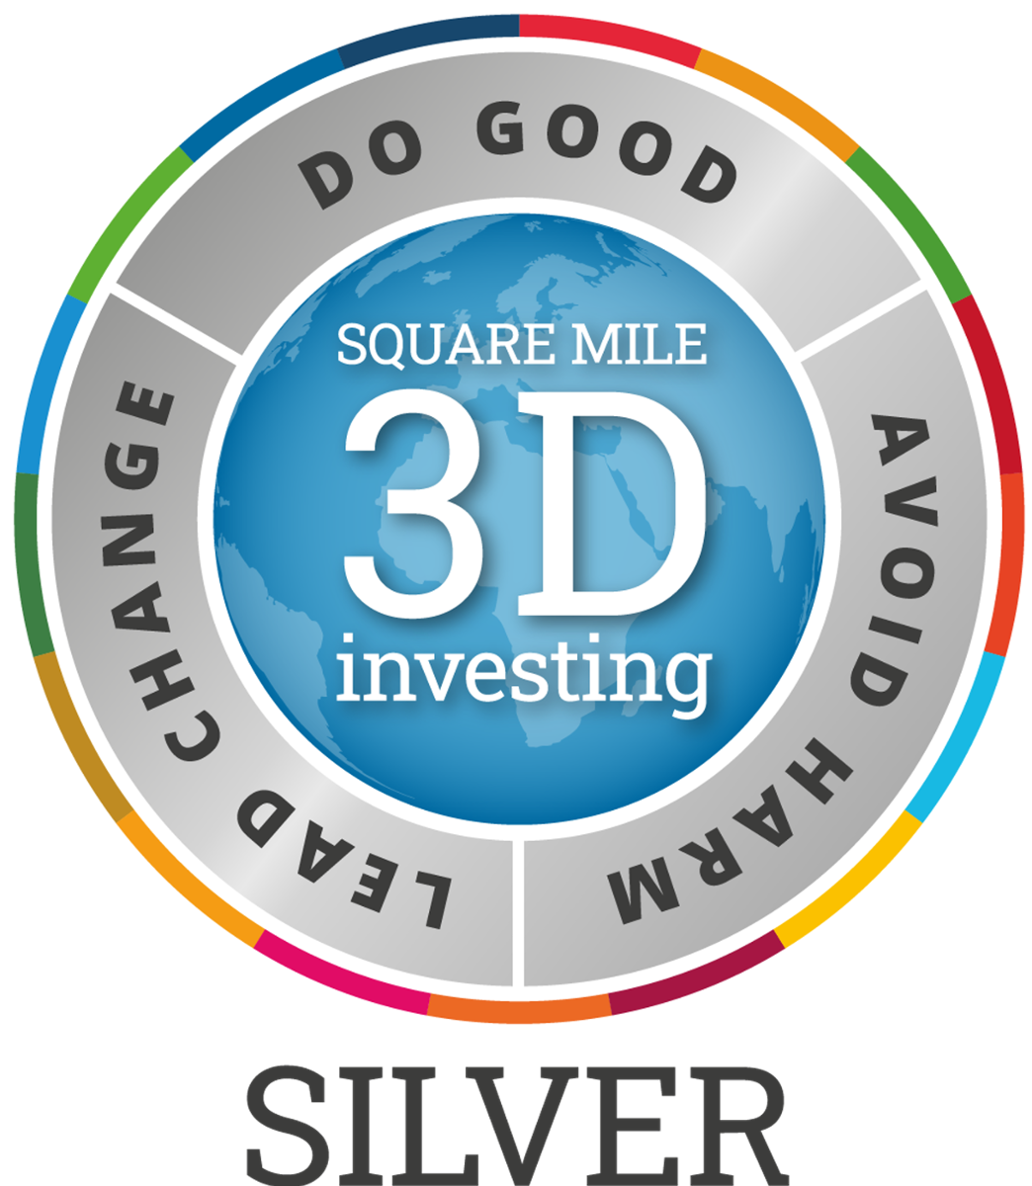 3D investing square mile logo silver award. Do good, avoid harm, lead change